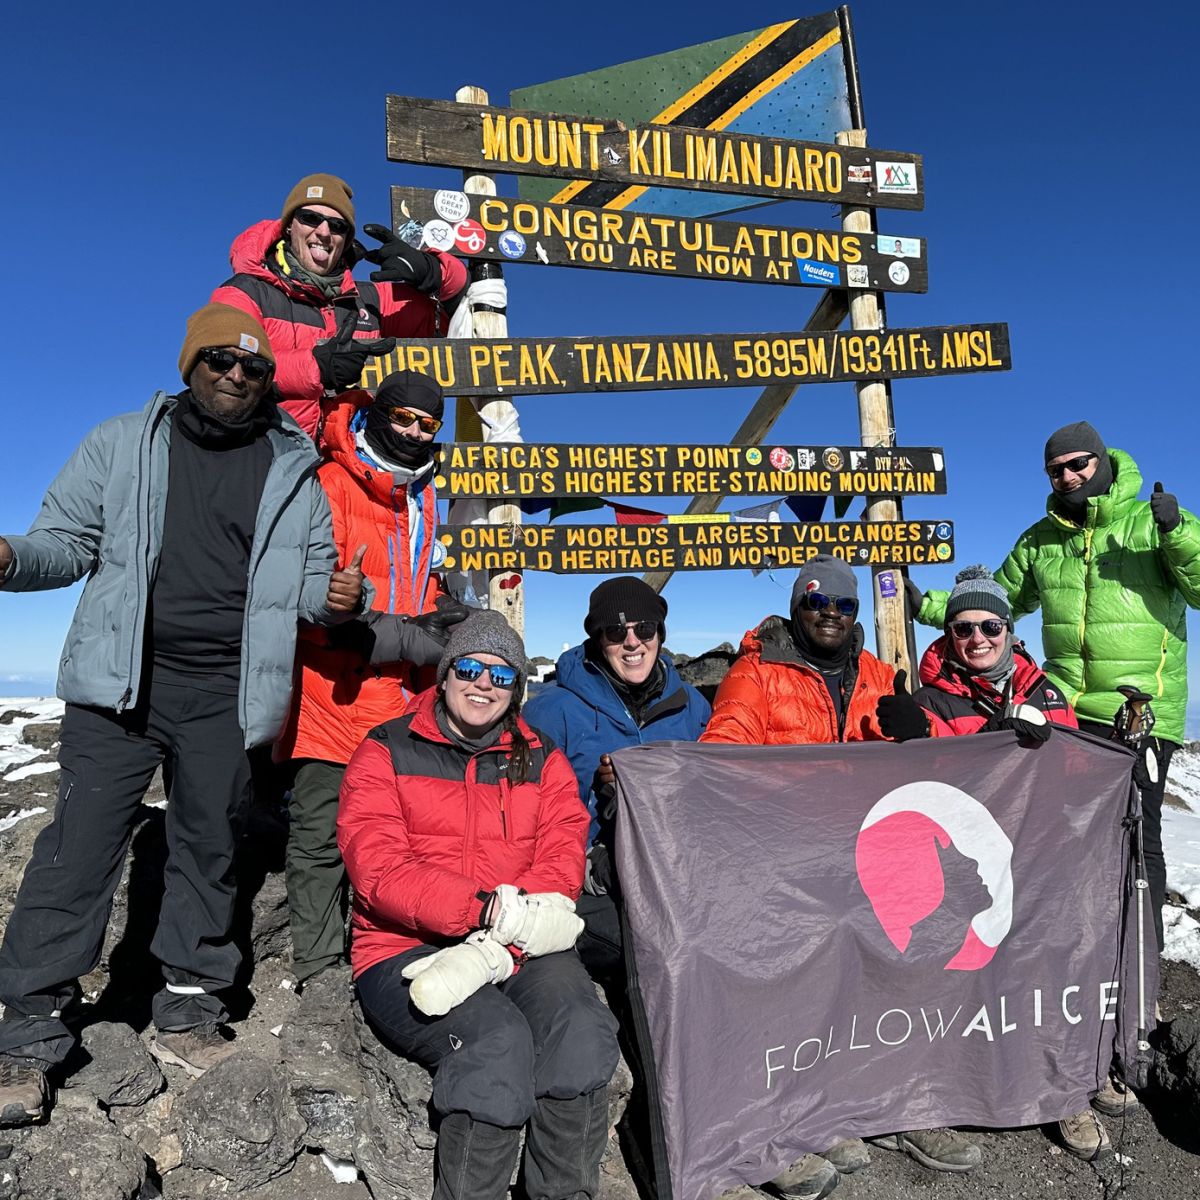 Uhuru Peak, Kilimanjaro summit, group pic with FA flag 1 January 2023 New Year's Eve